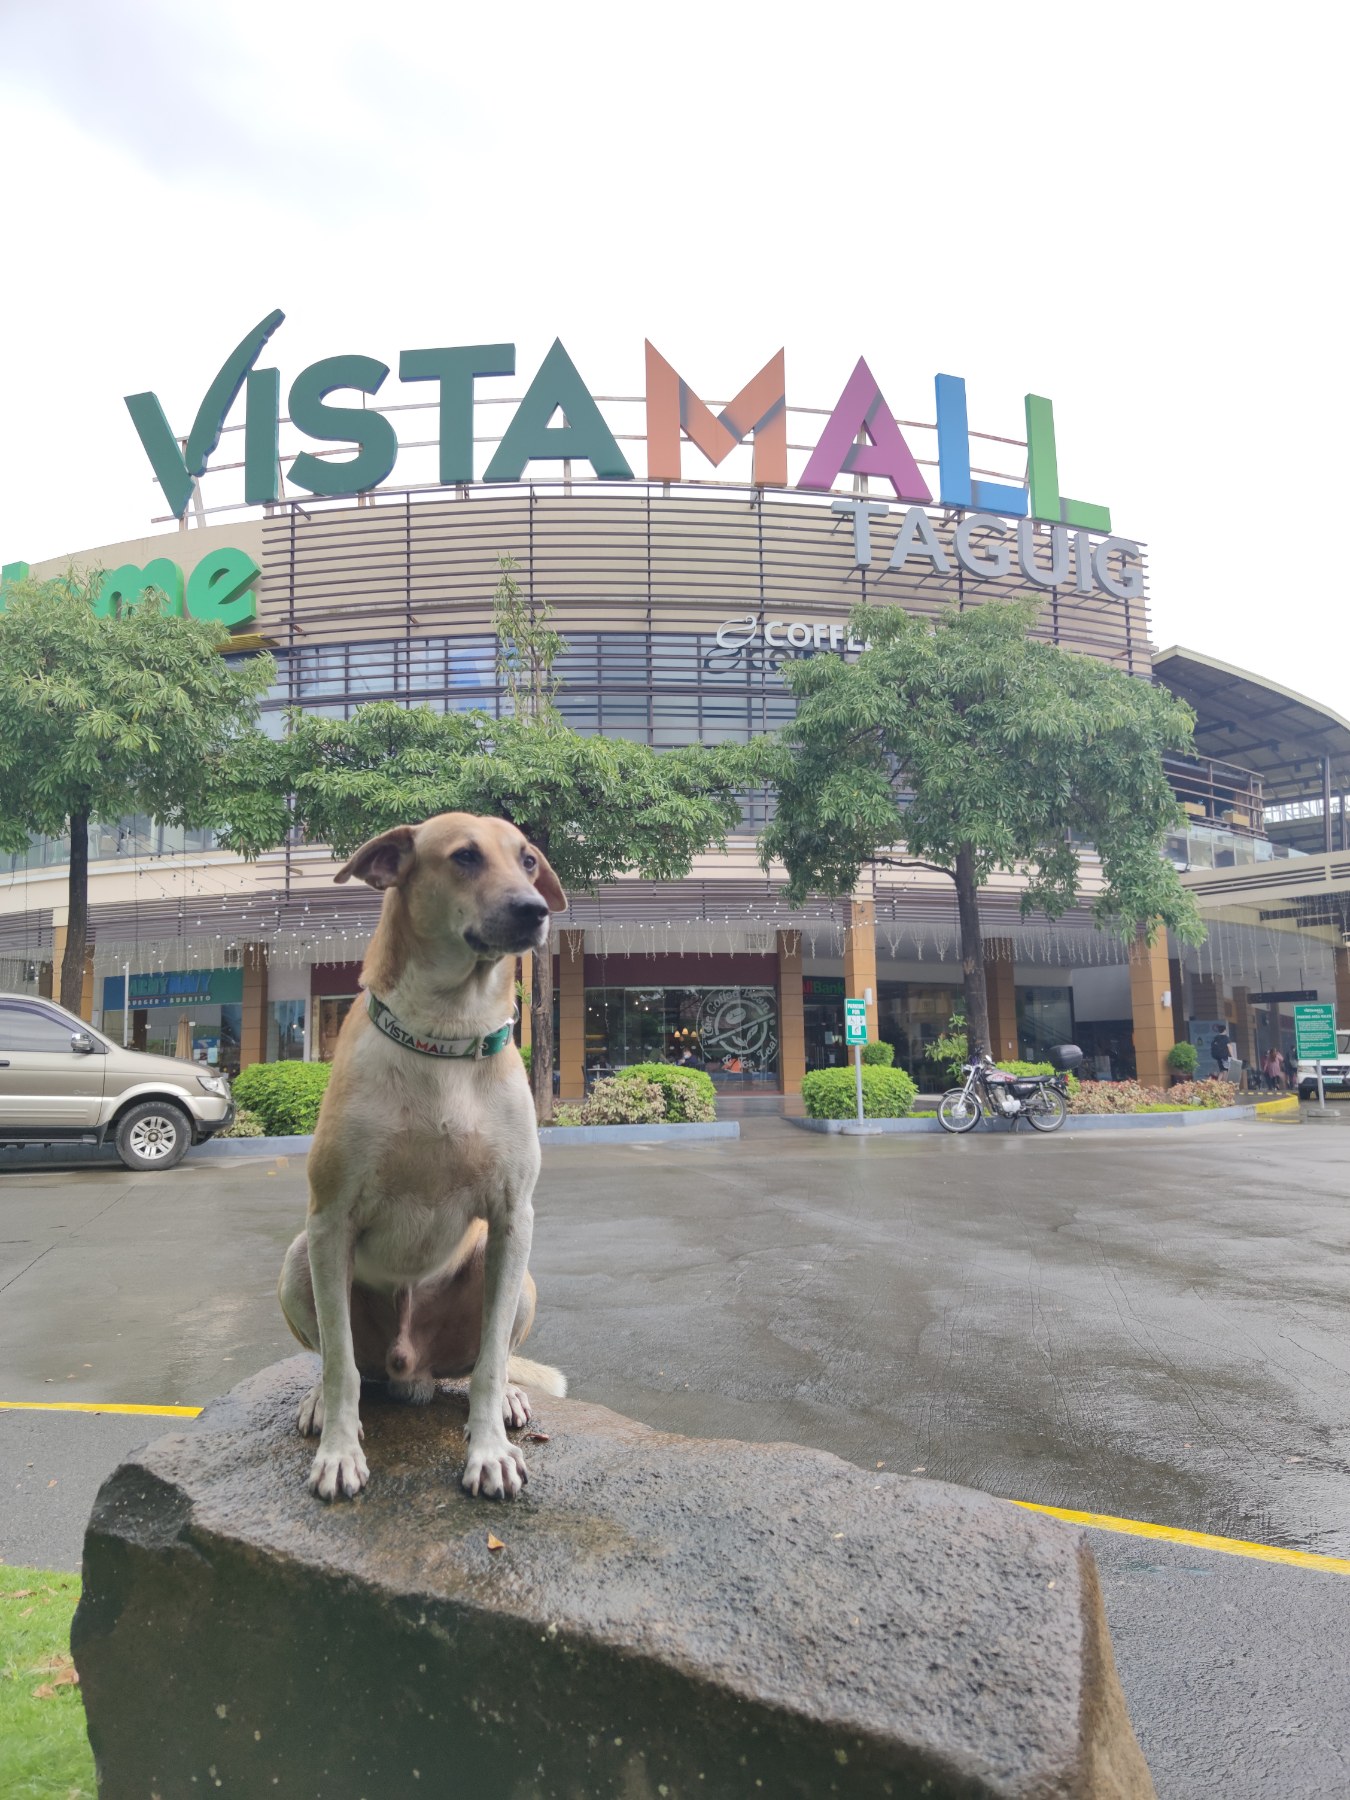 Dogdog, the brave dog of Vista Mall